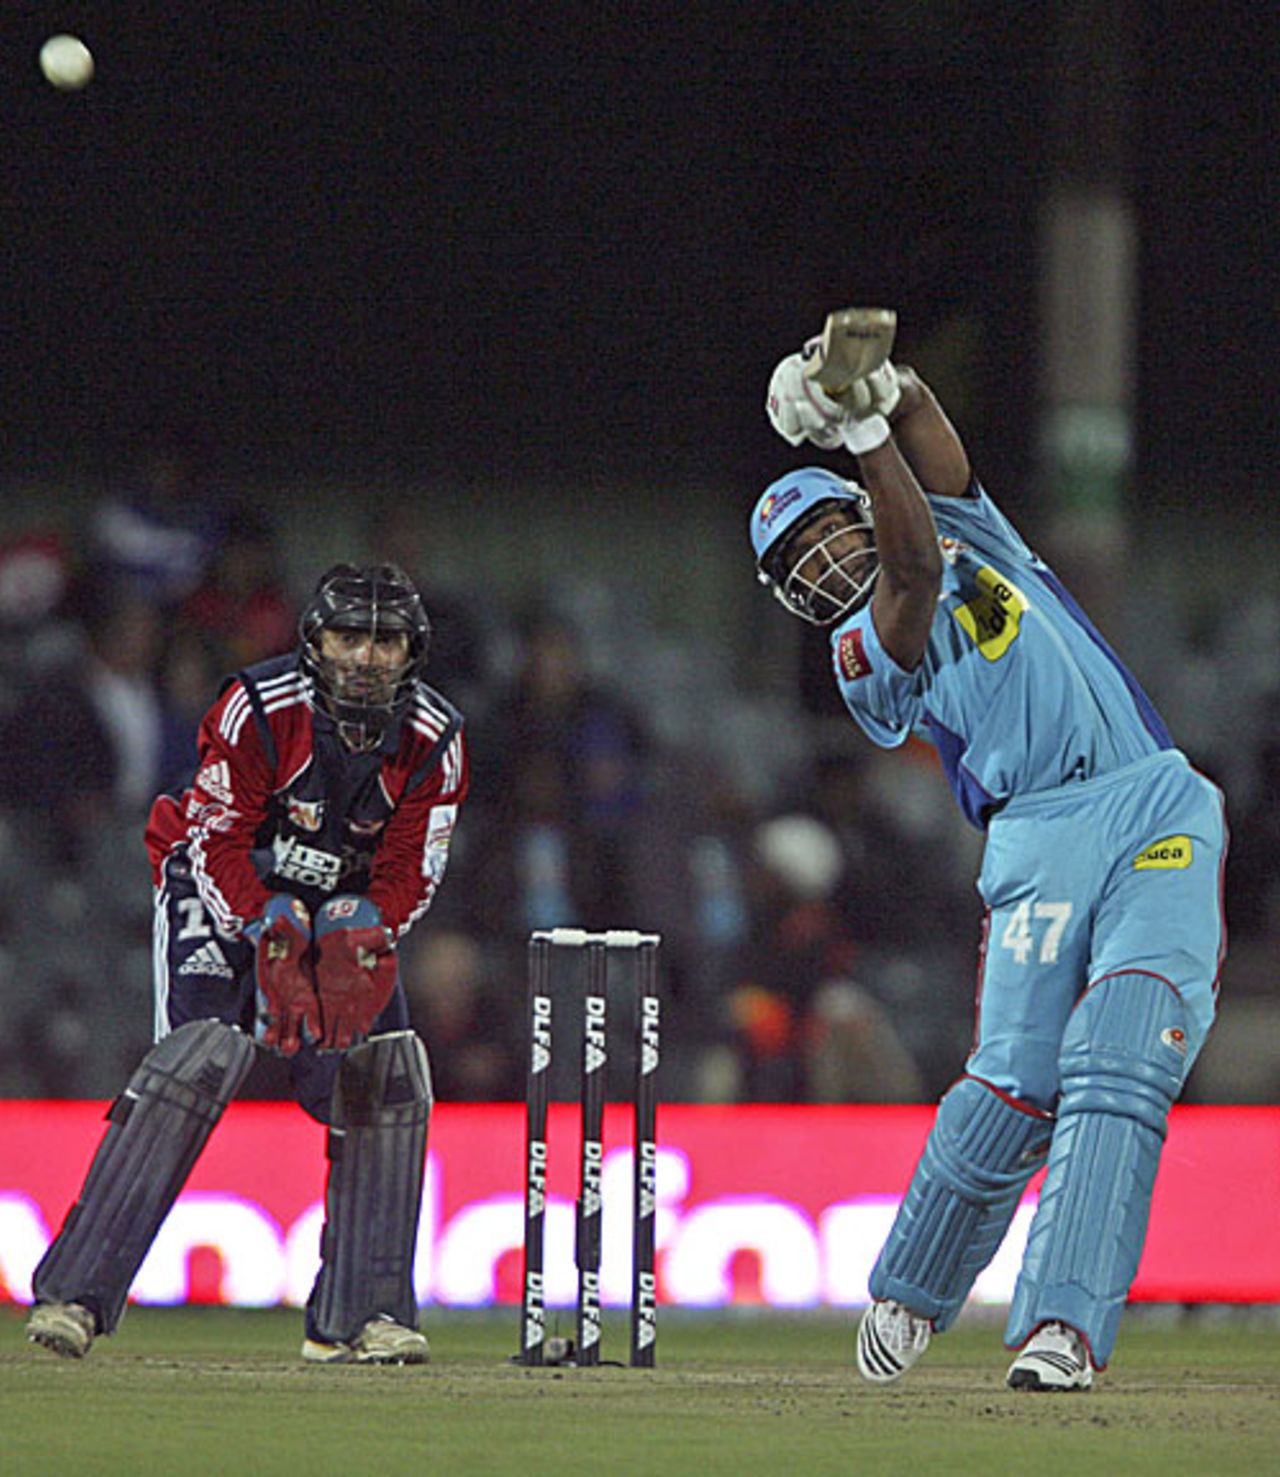 Dwayne Bravo top scored for Mumbai Indians with 35, Delhi Daredevils v Mumbai Indians, IPL, East London, May 8, 2009 